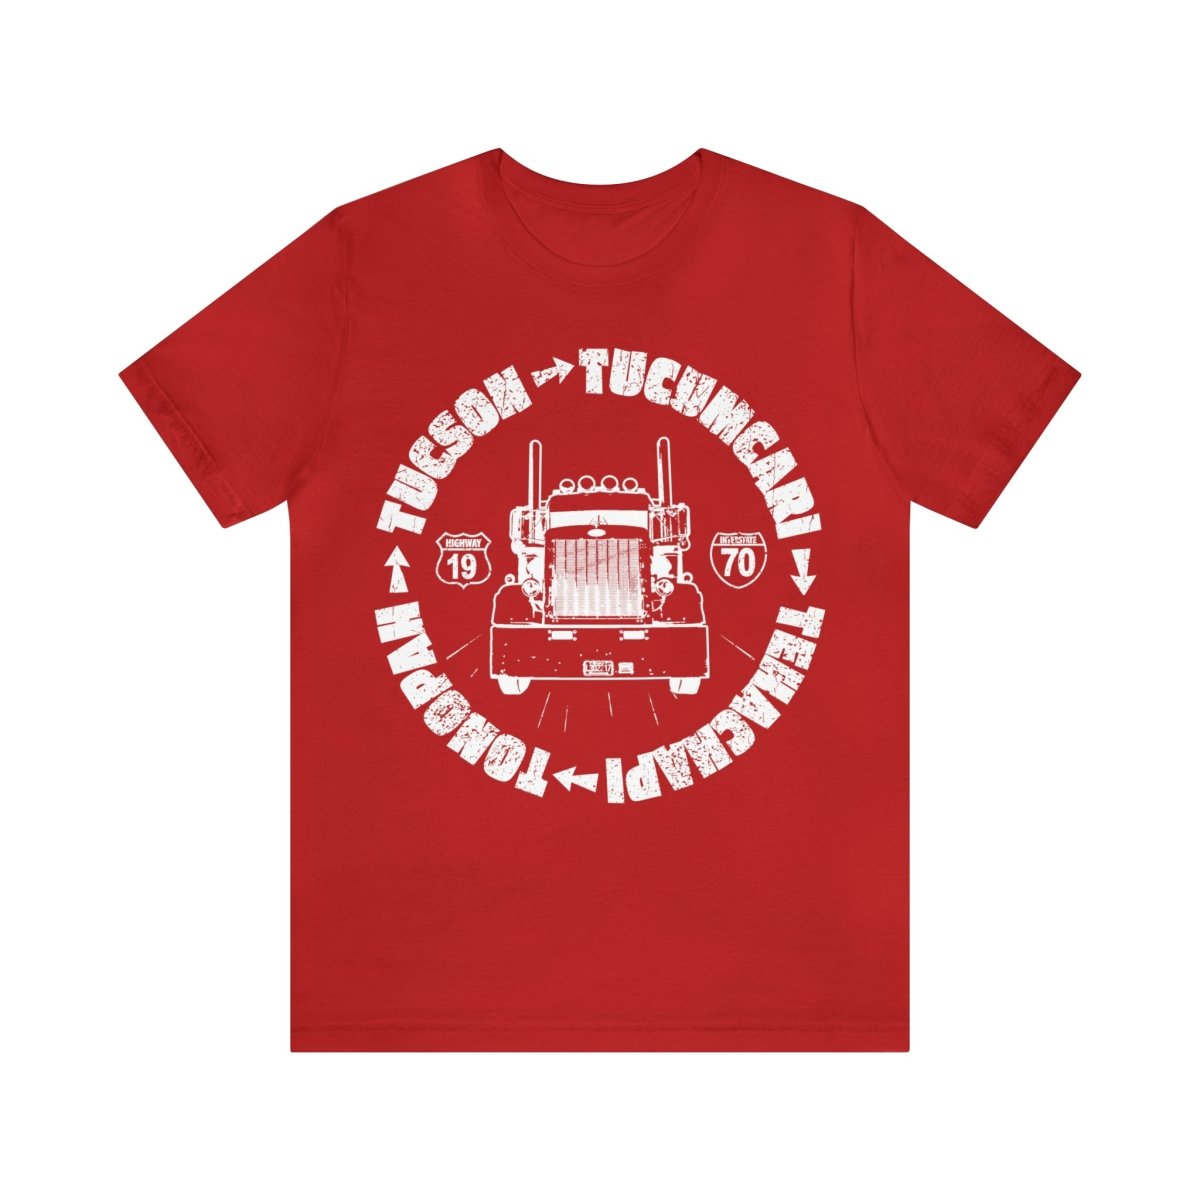 Drivin' Truck Premium T-Shirt, Traveler Gift, Road Trip, Haulin